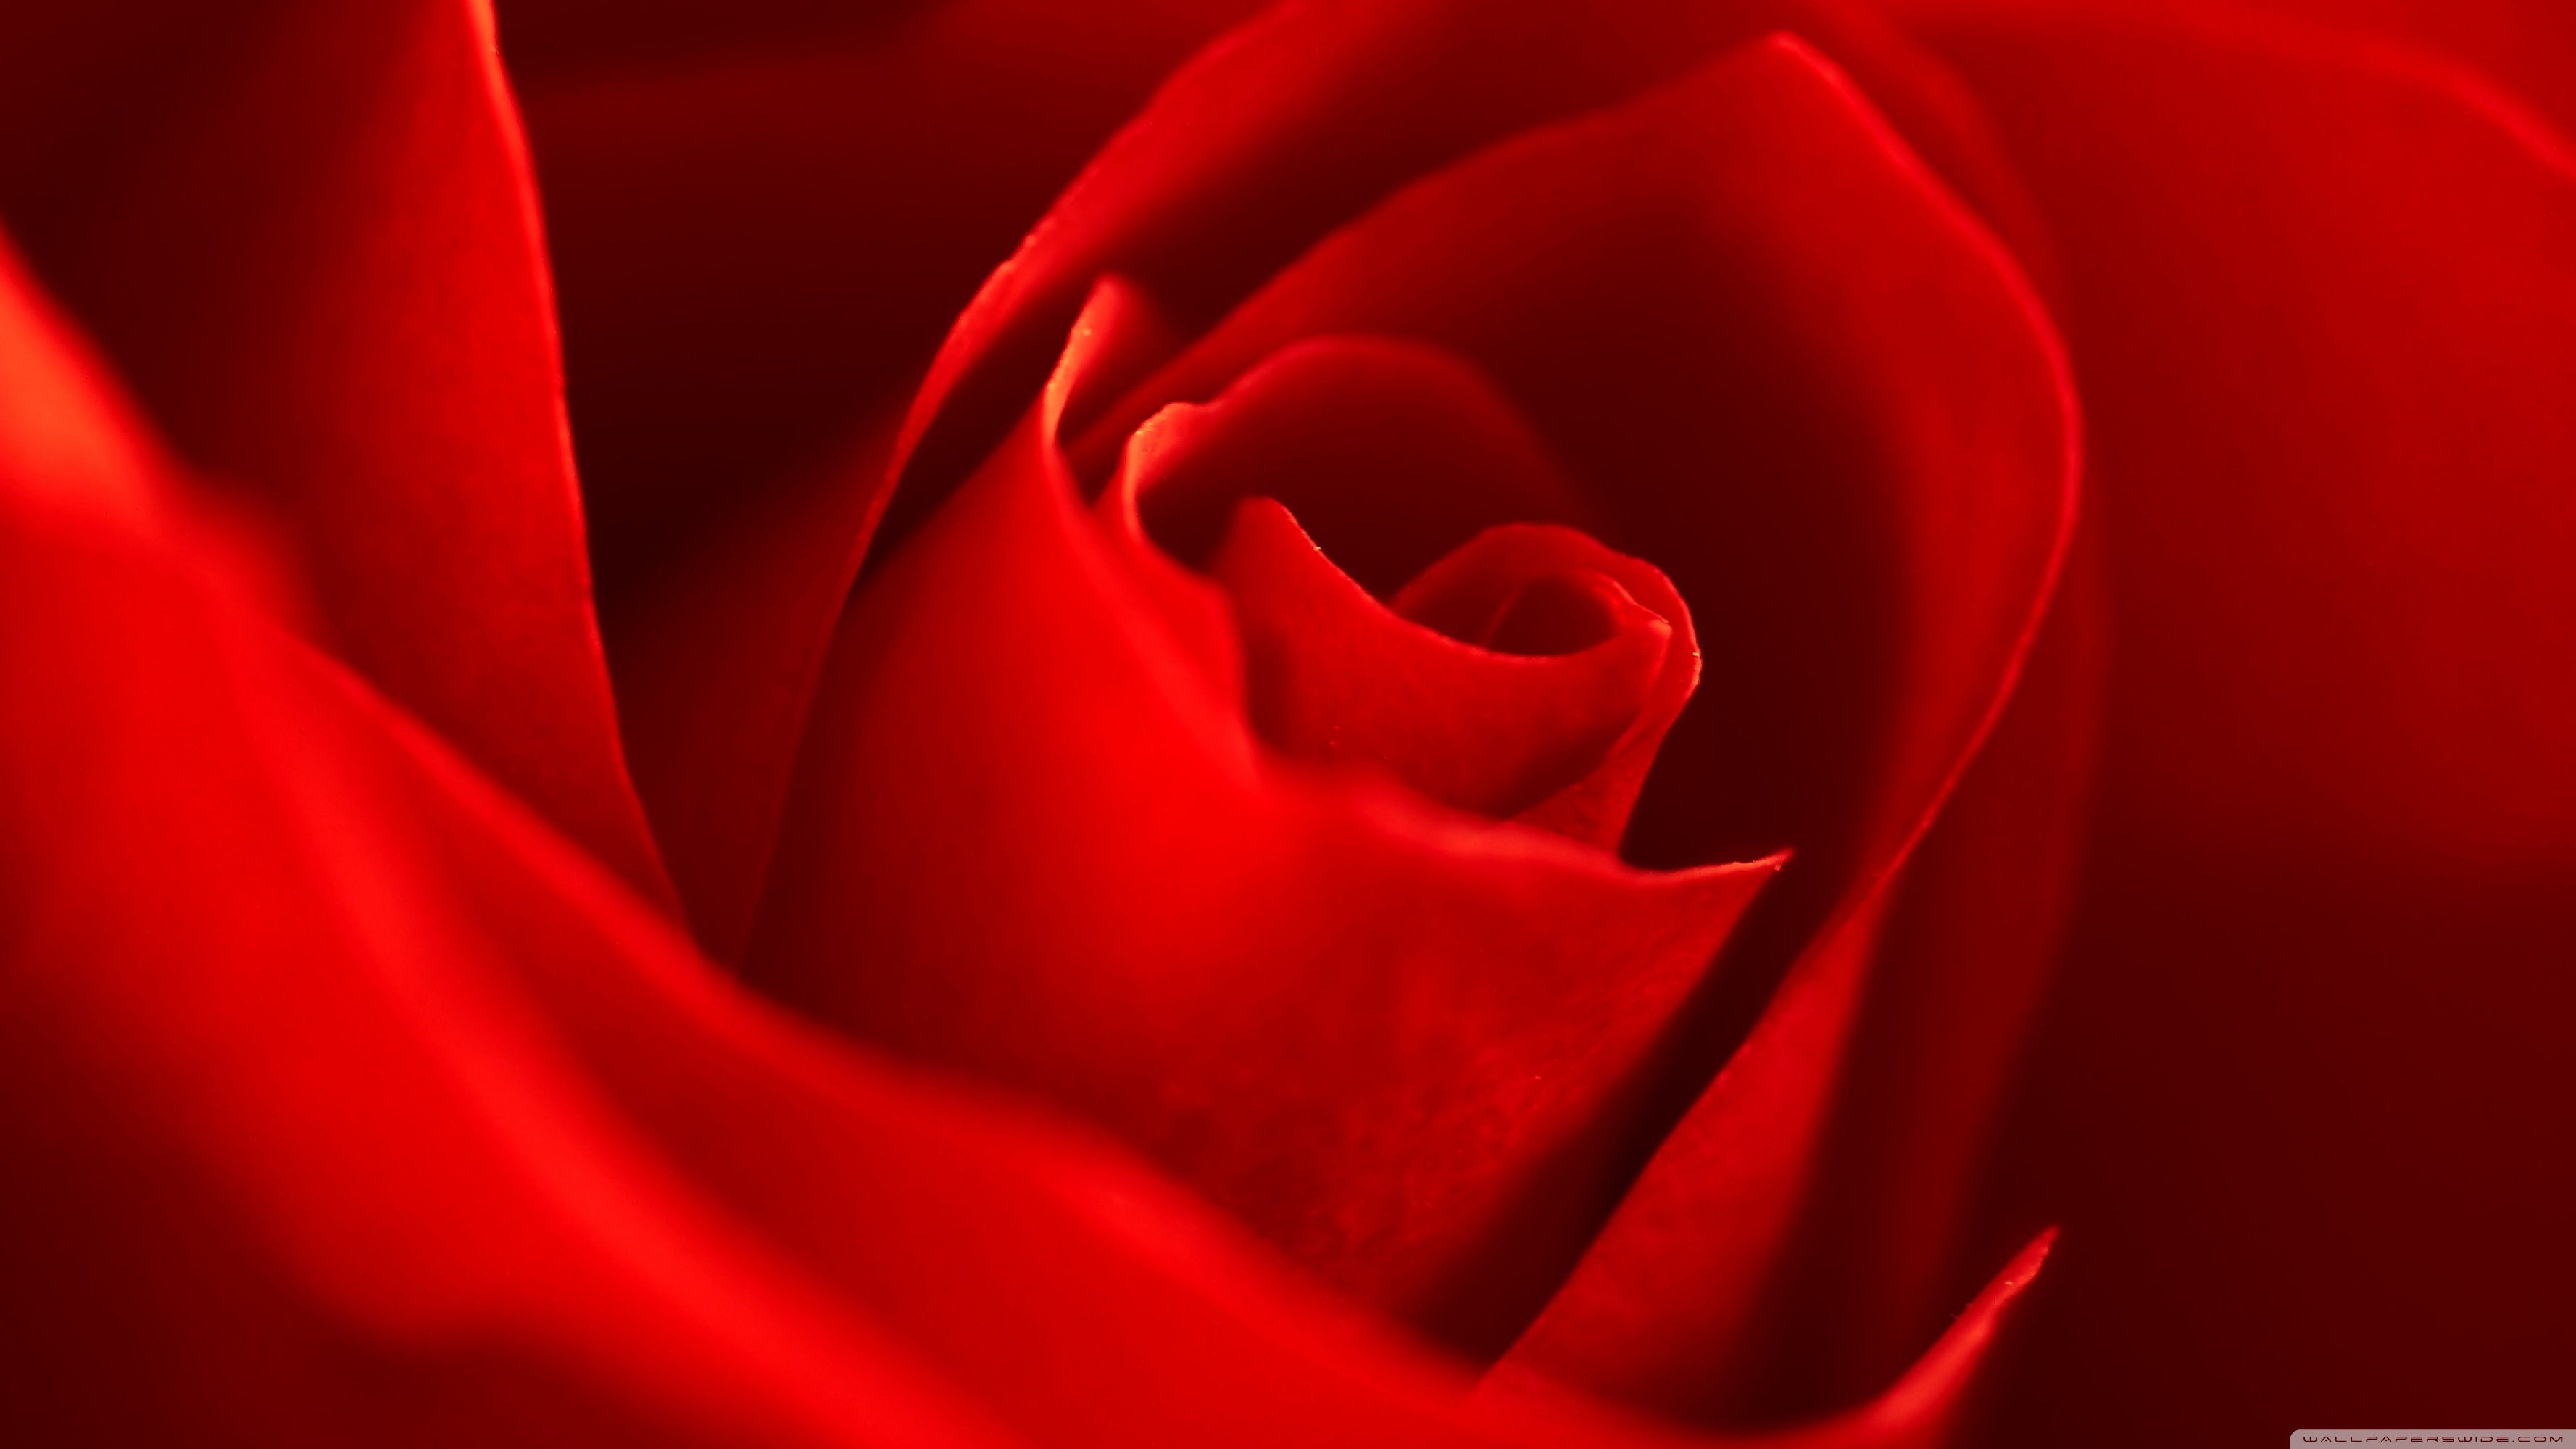 Very Beautiful Red Rose Flower 4k HD Desktop Wallpaper For